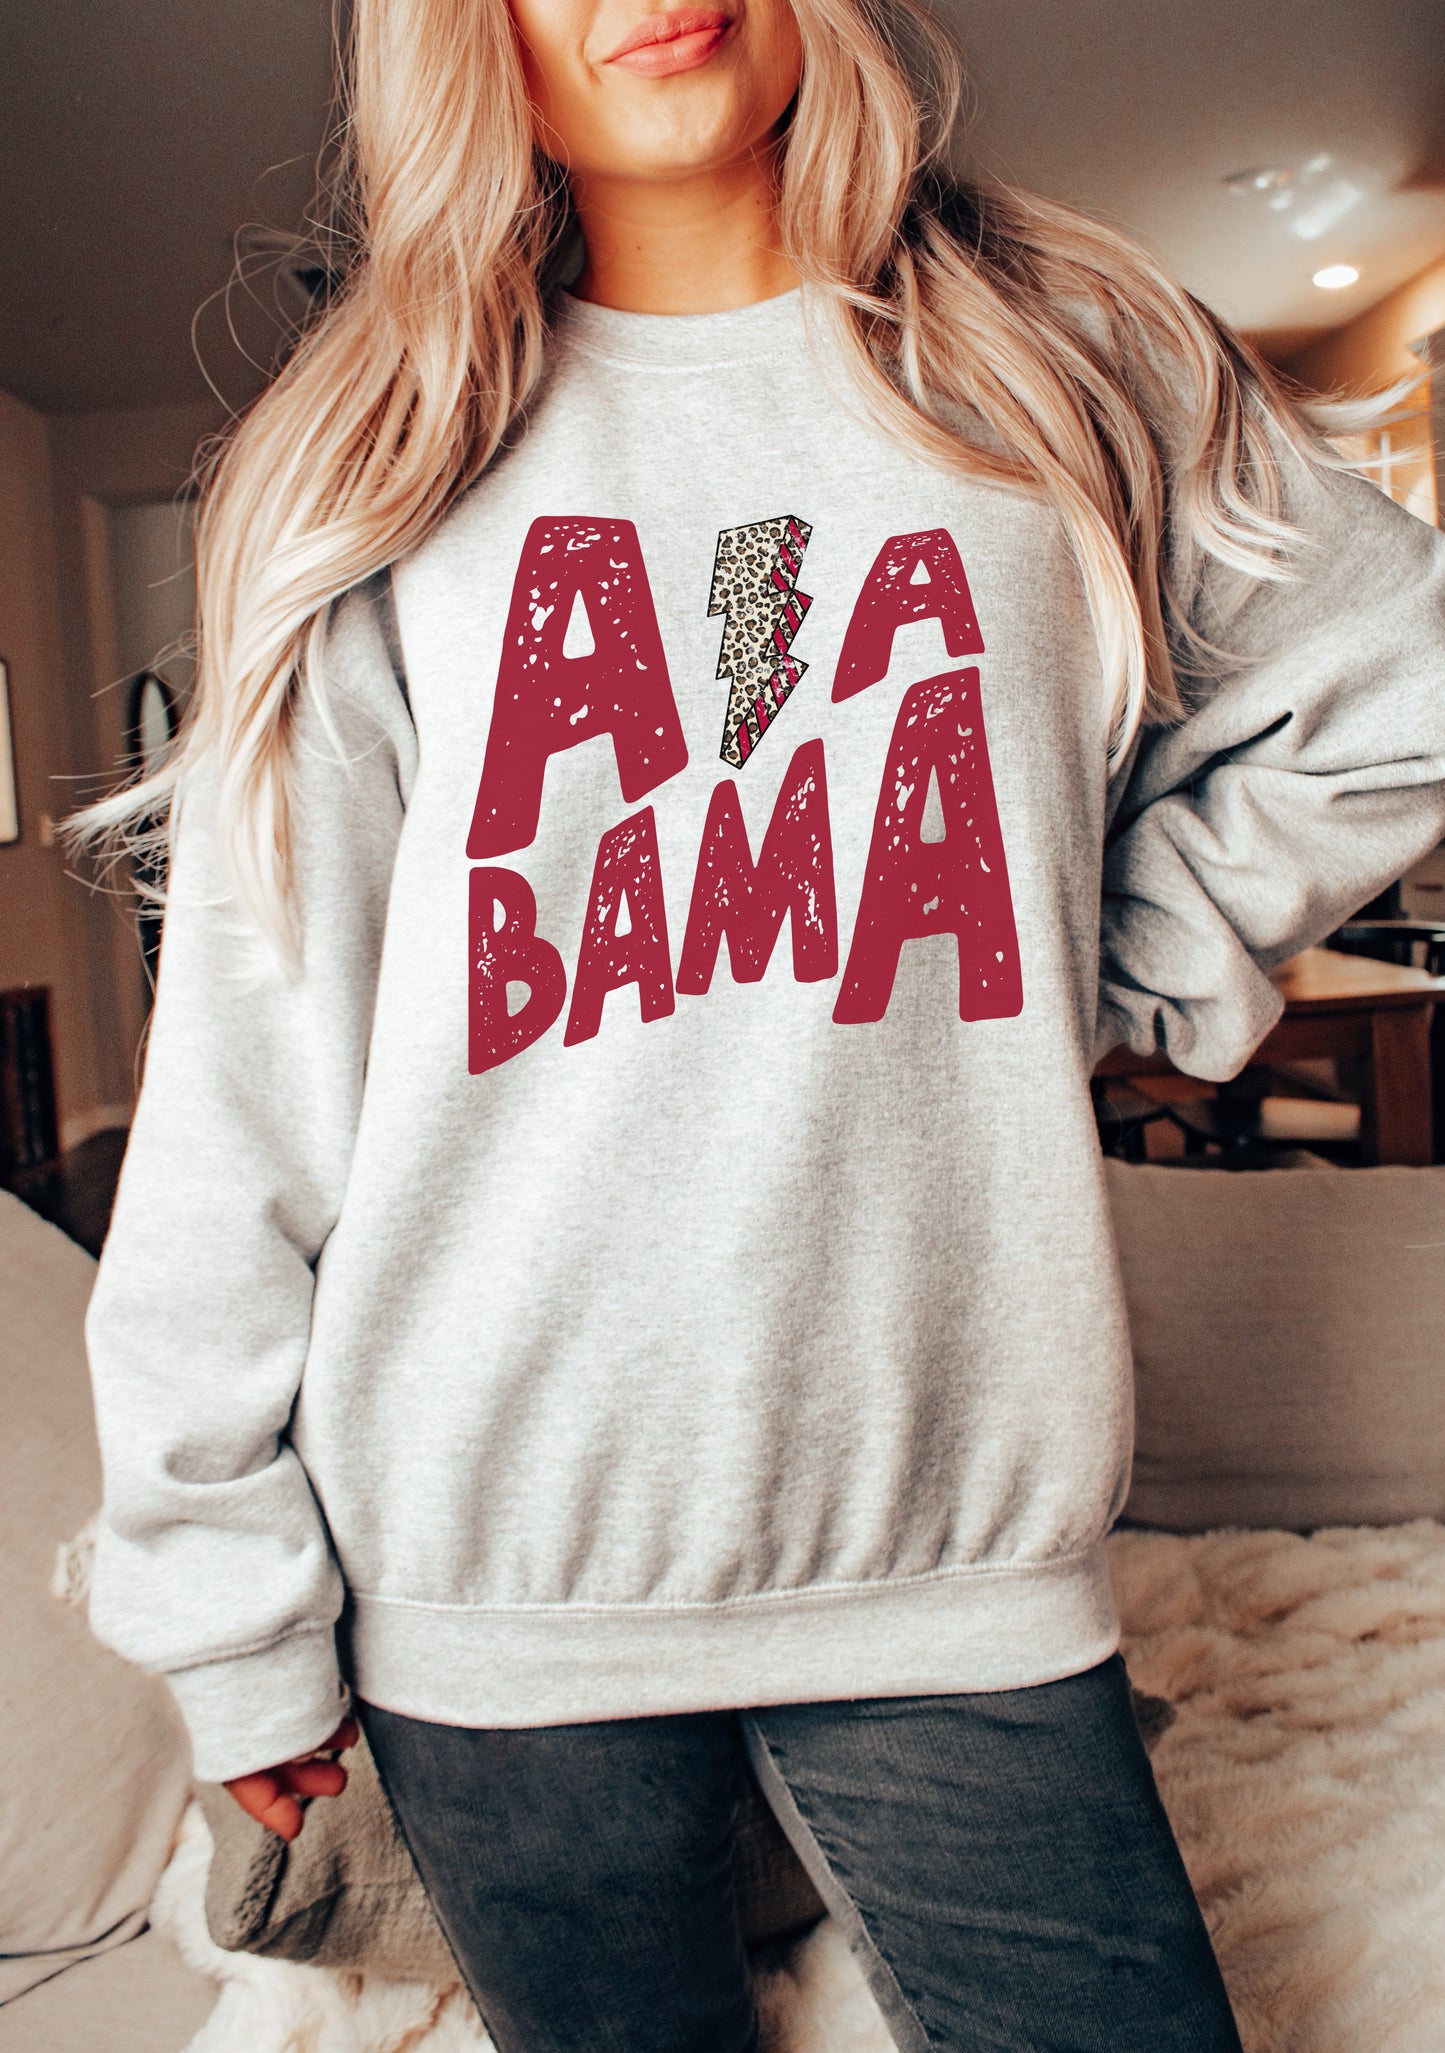 Alabama Bolt Sweatshirt